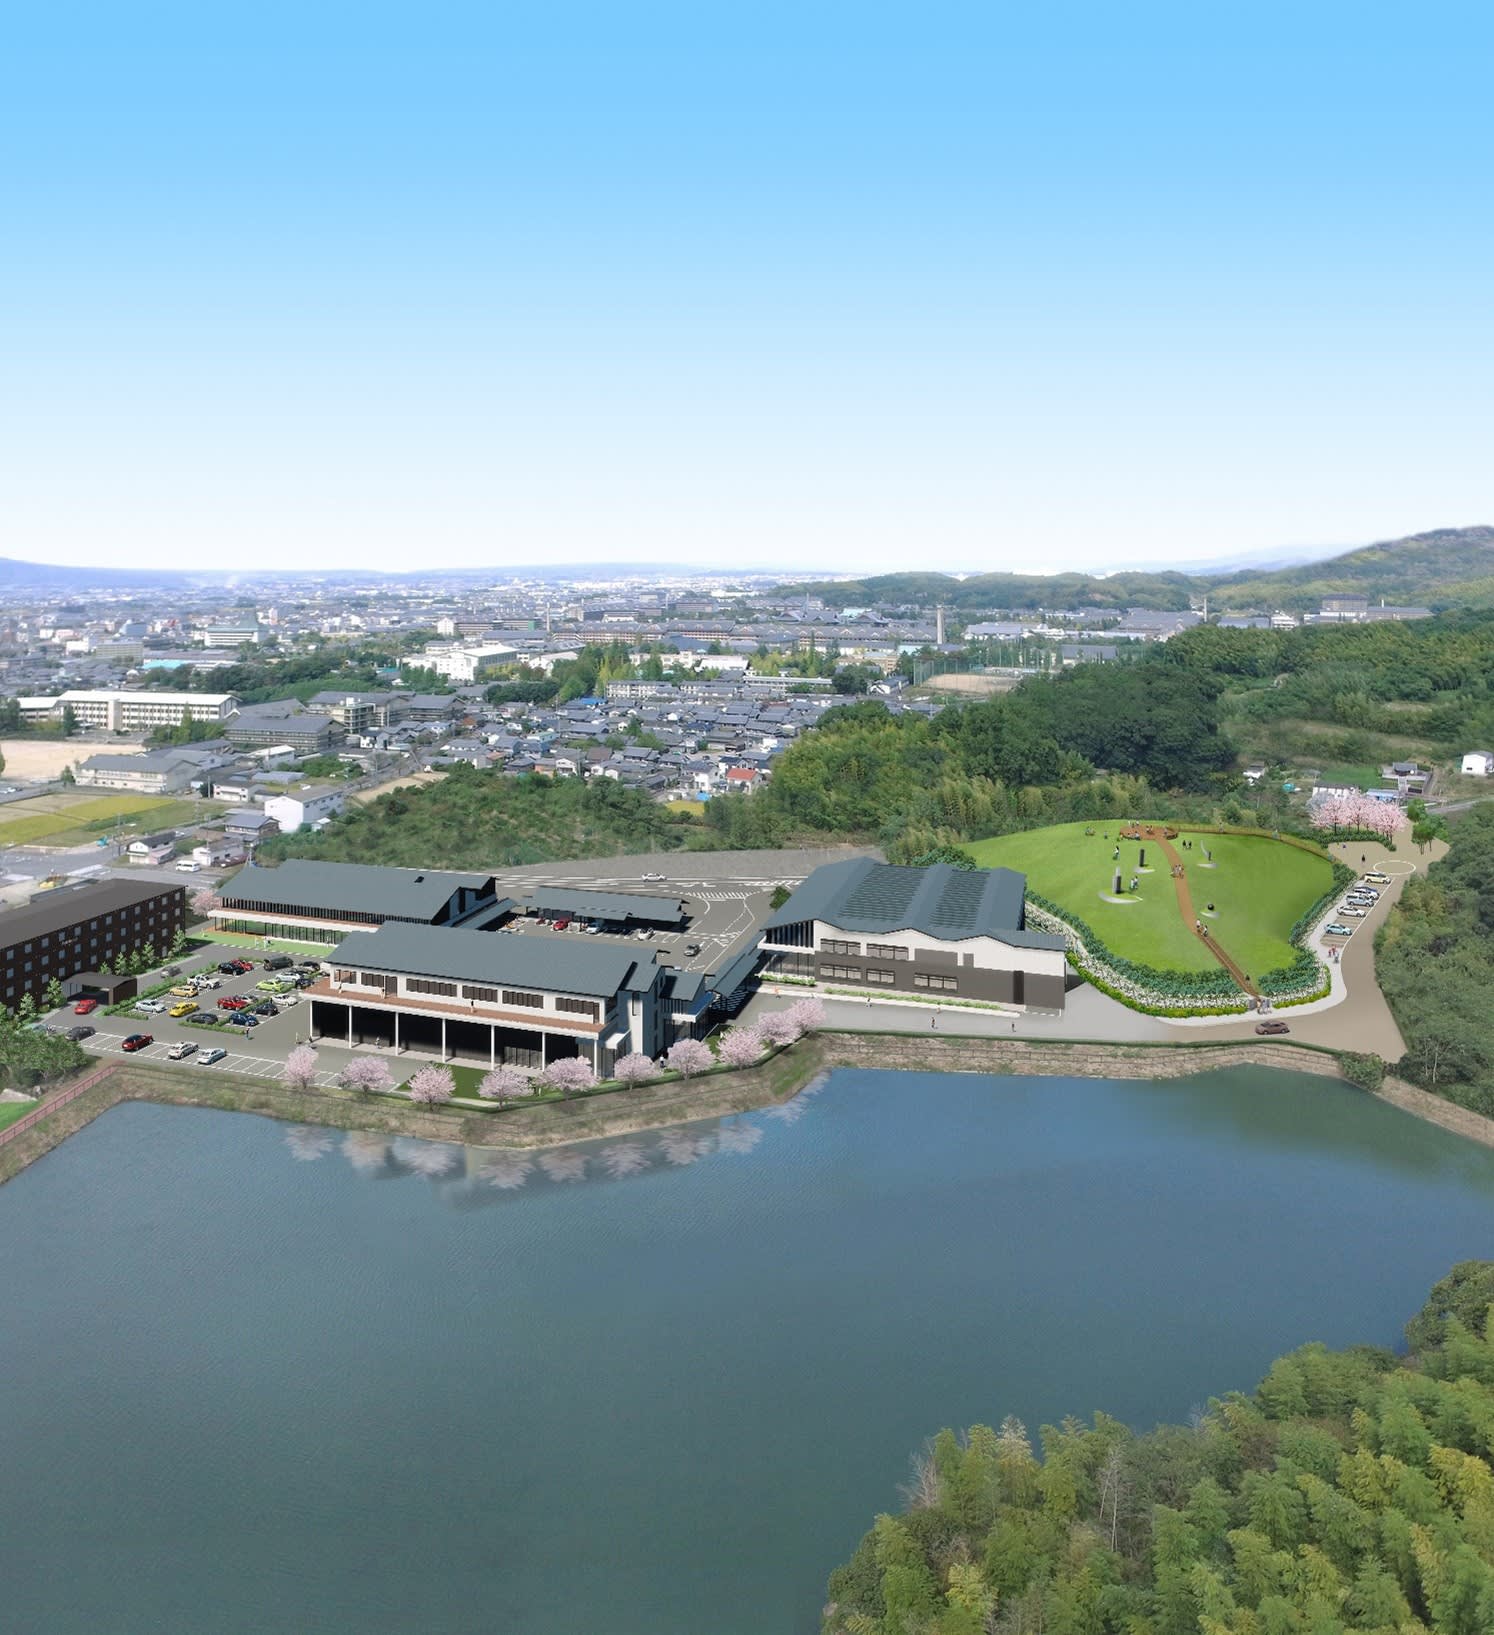 Nara Prefecture Historical and Artistic Culture Complex